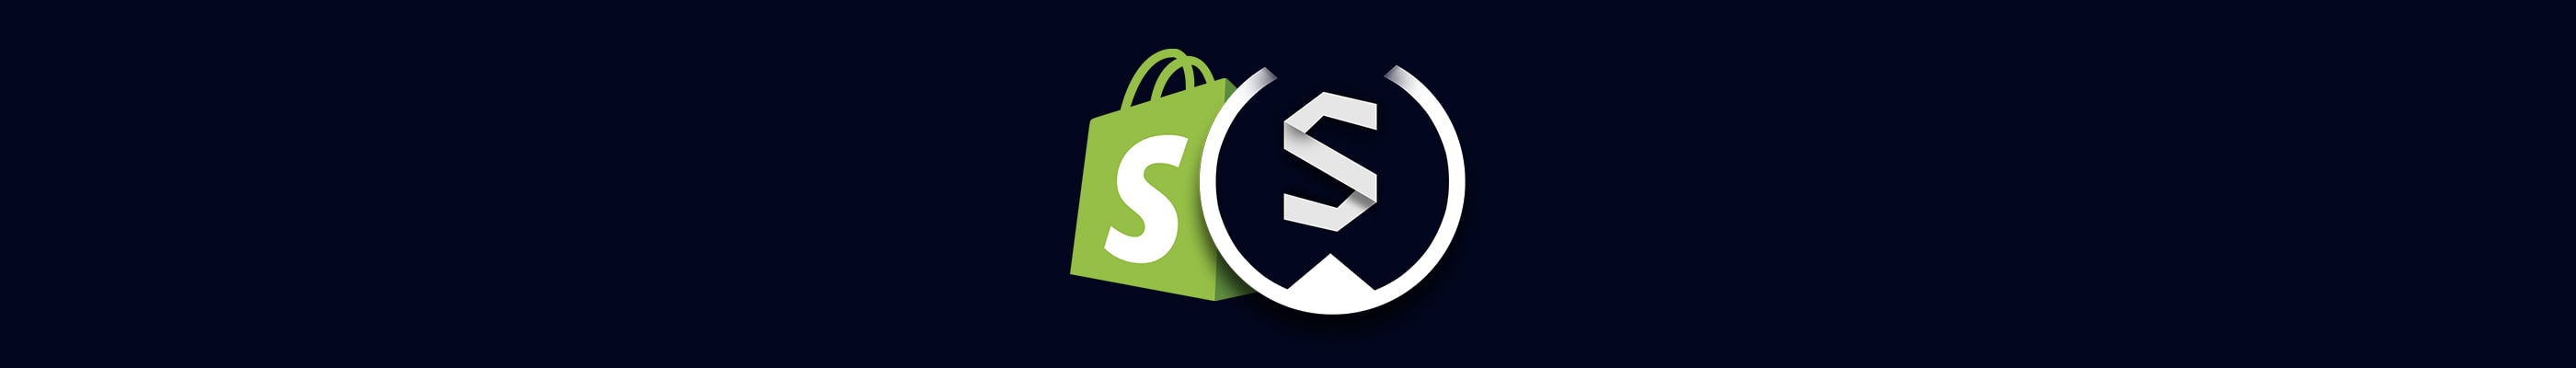 Design elementen met Shopify WYSIWYG